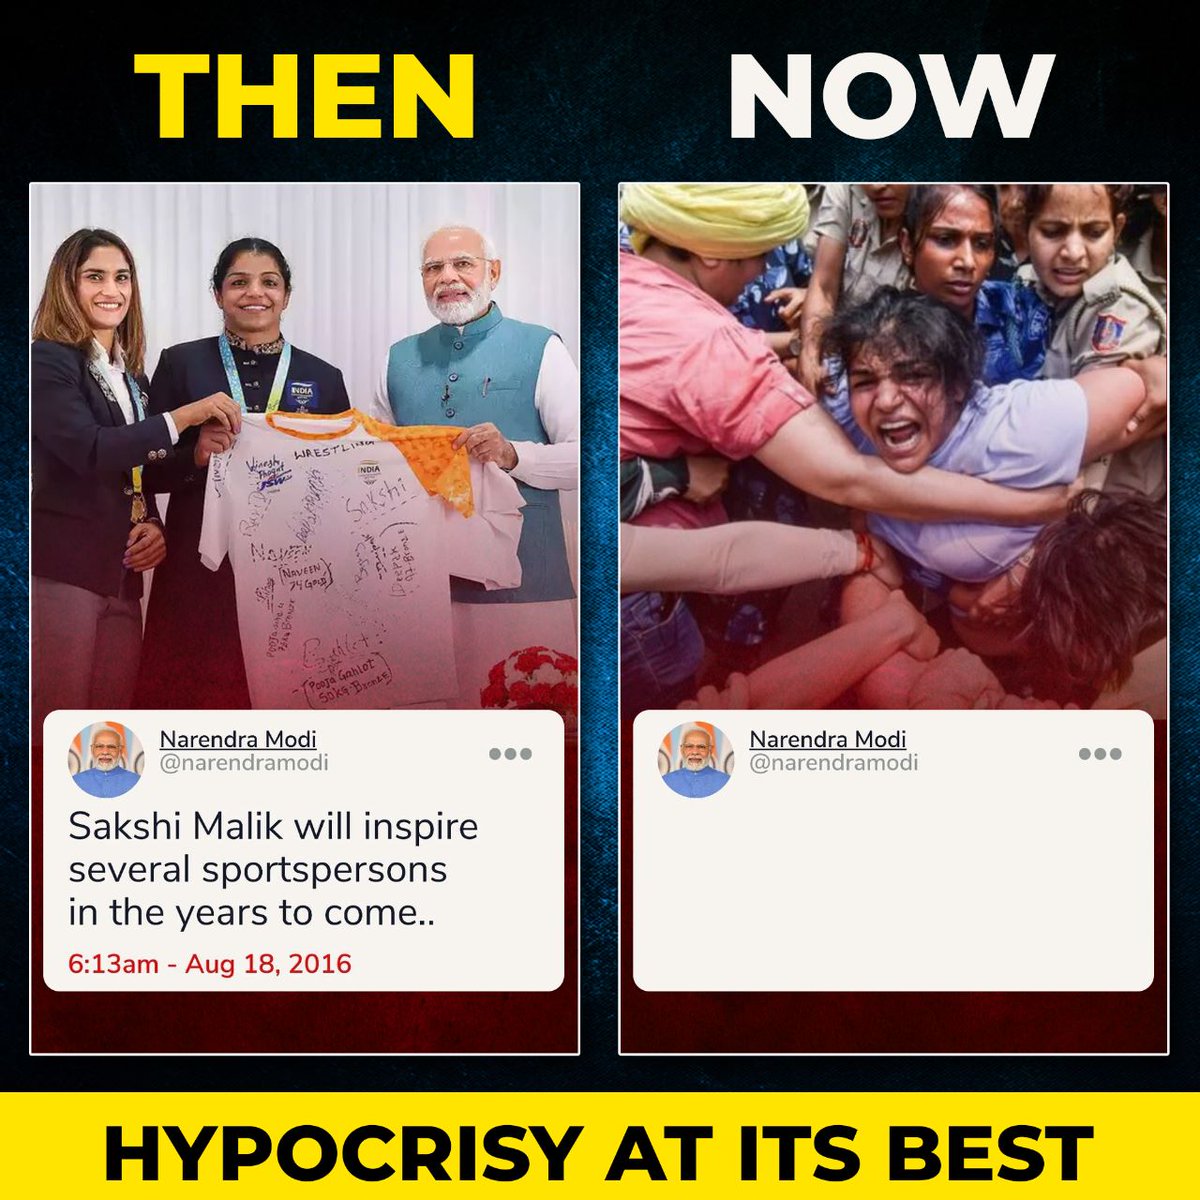 Hypocrisy at its best.